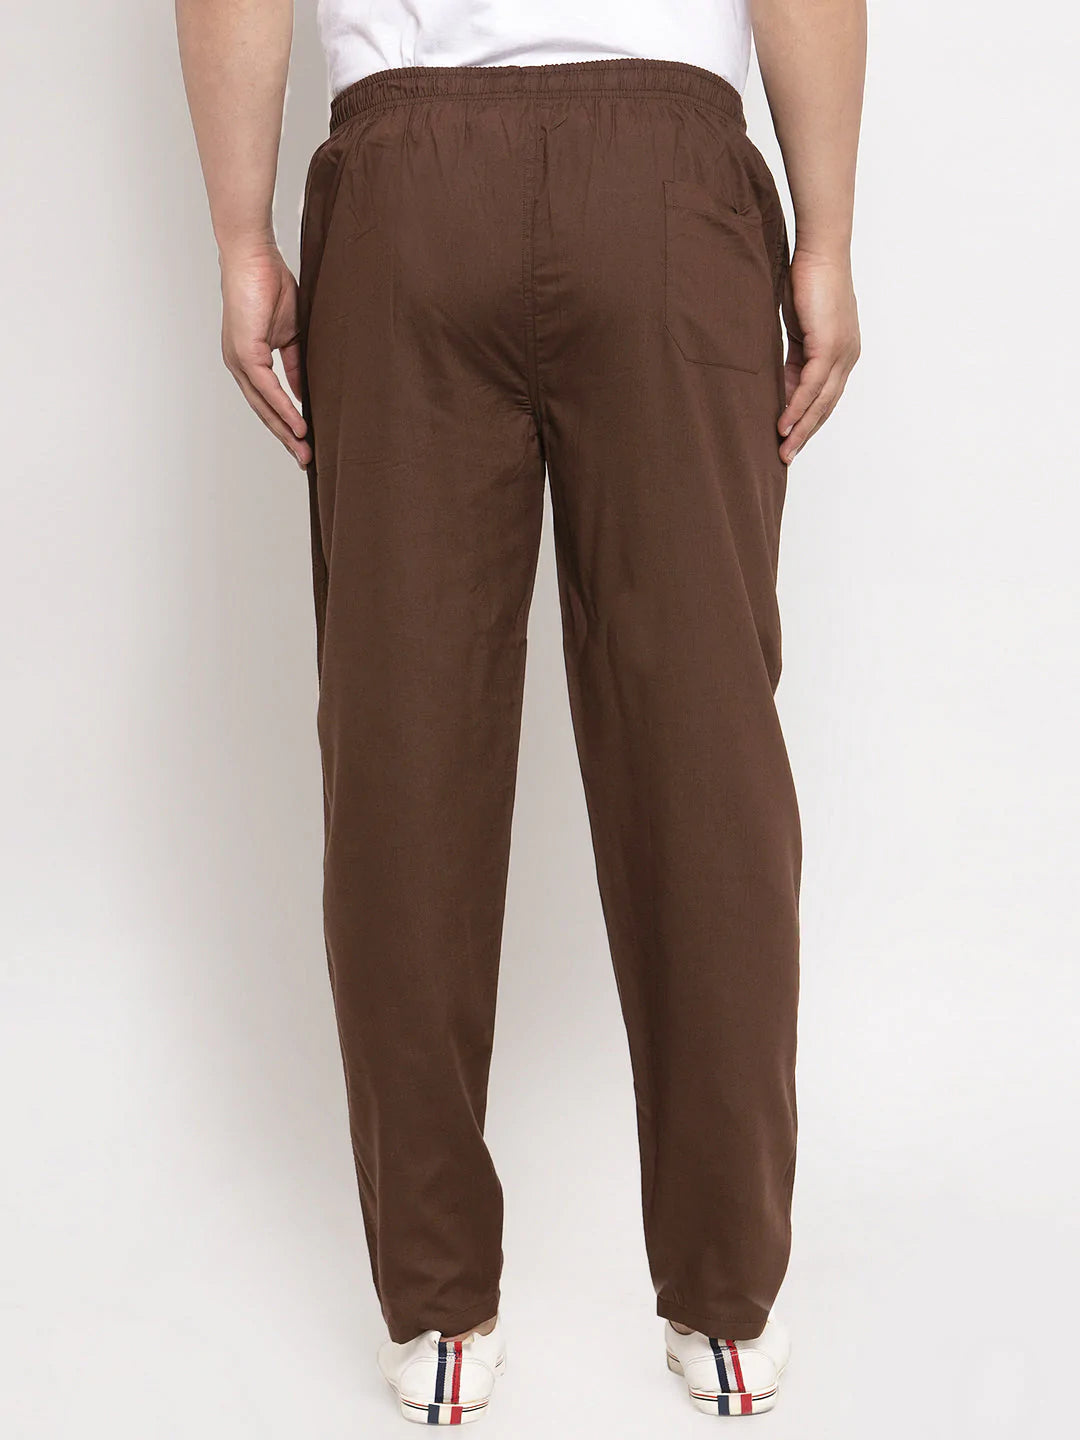 Jainish Men's Brown Solid Cotton Track Pants ( JOG 011Coffee )